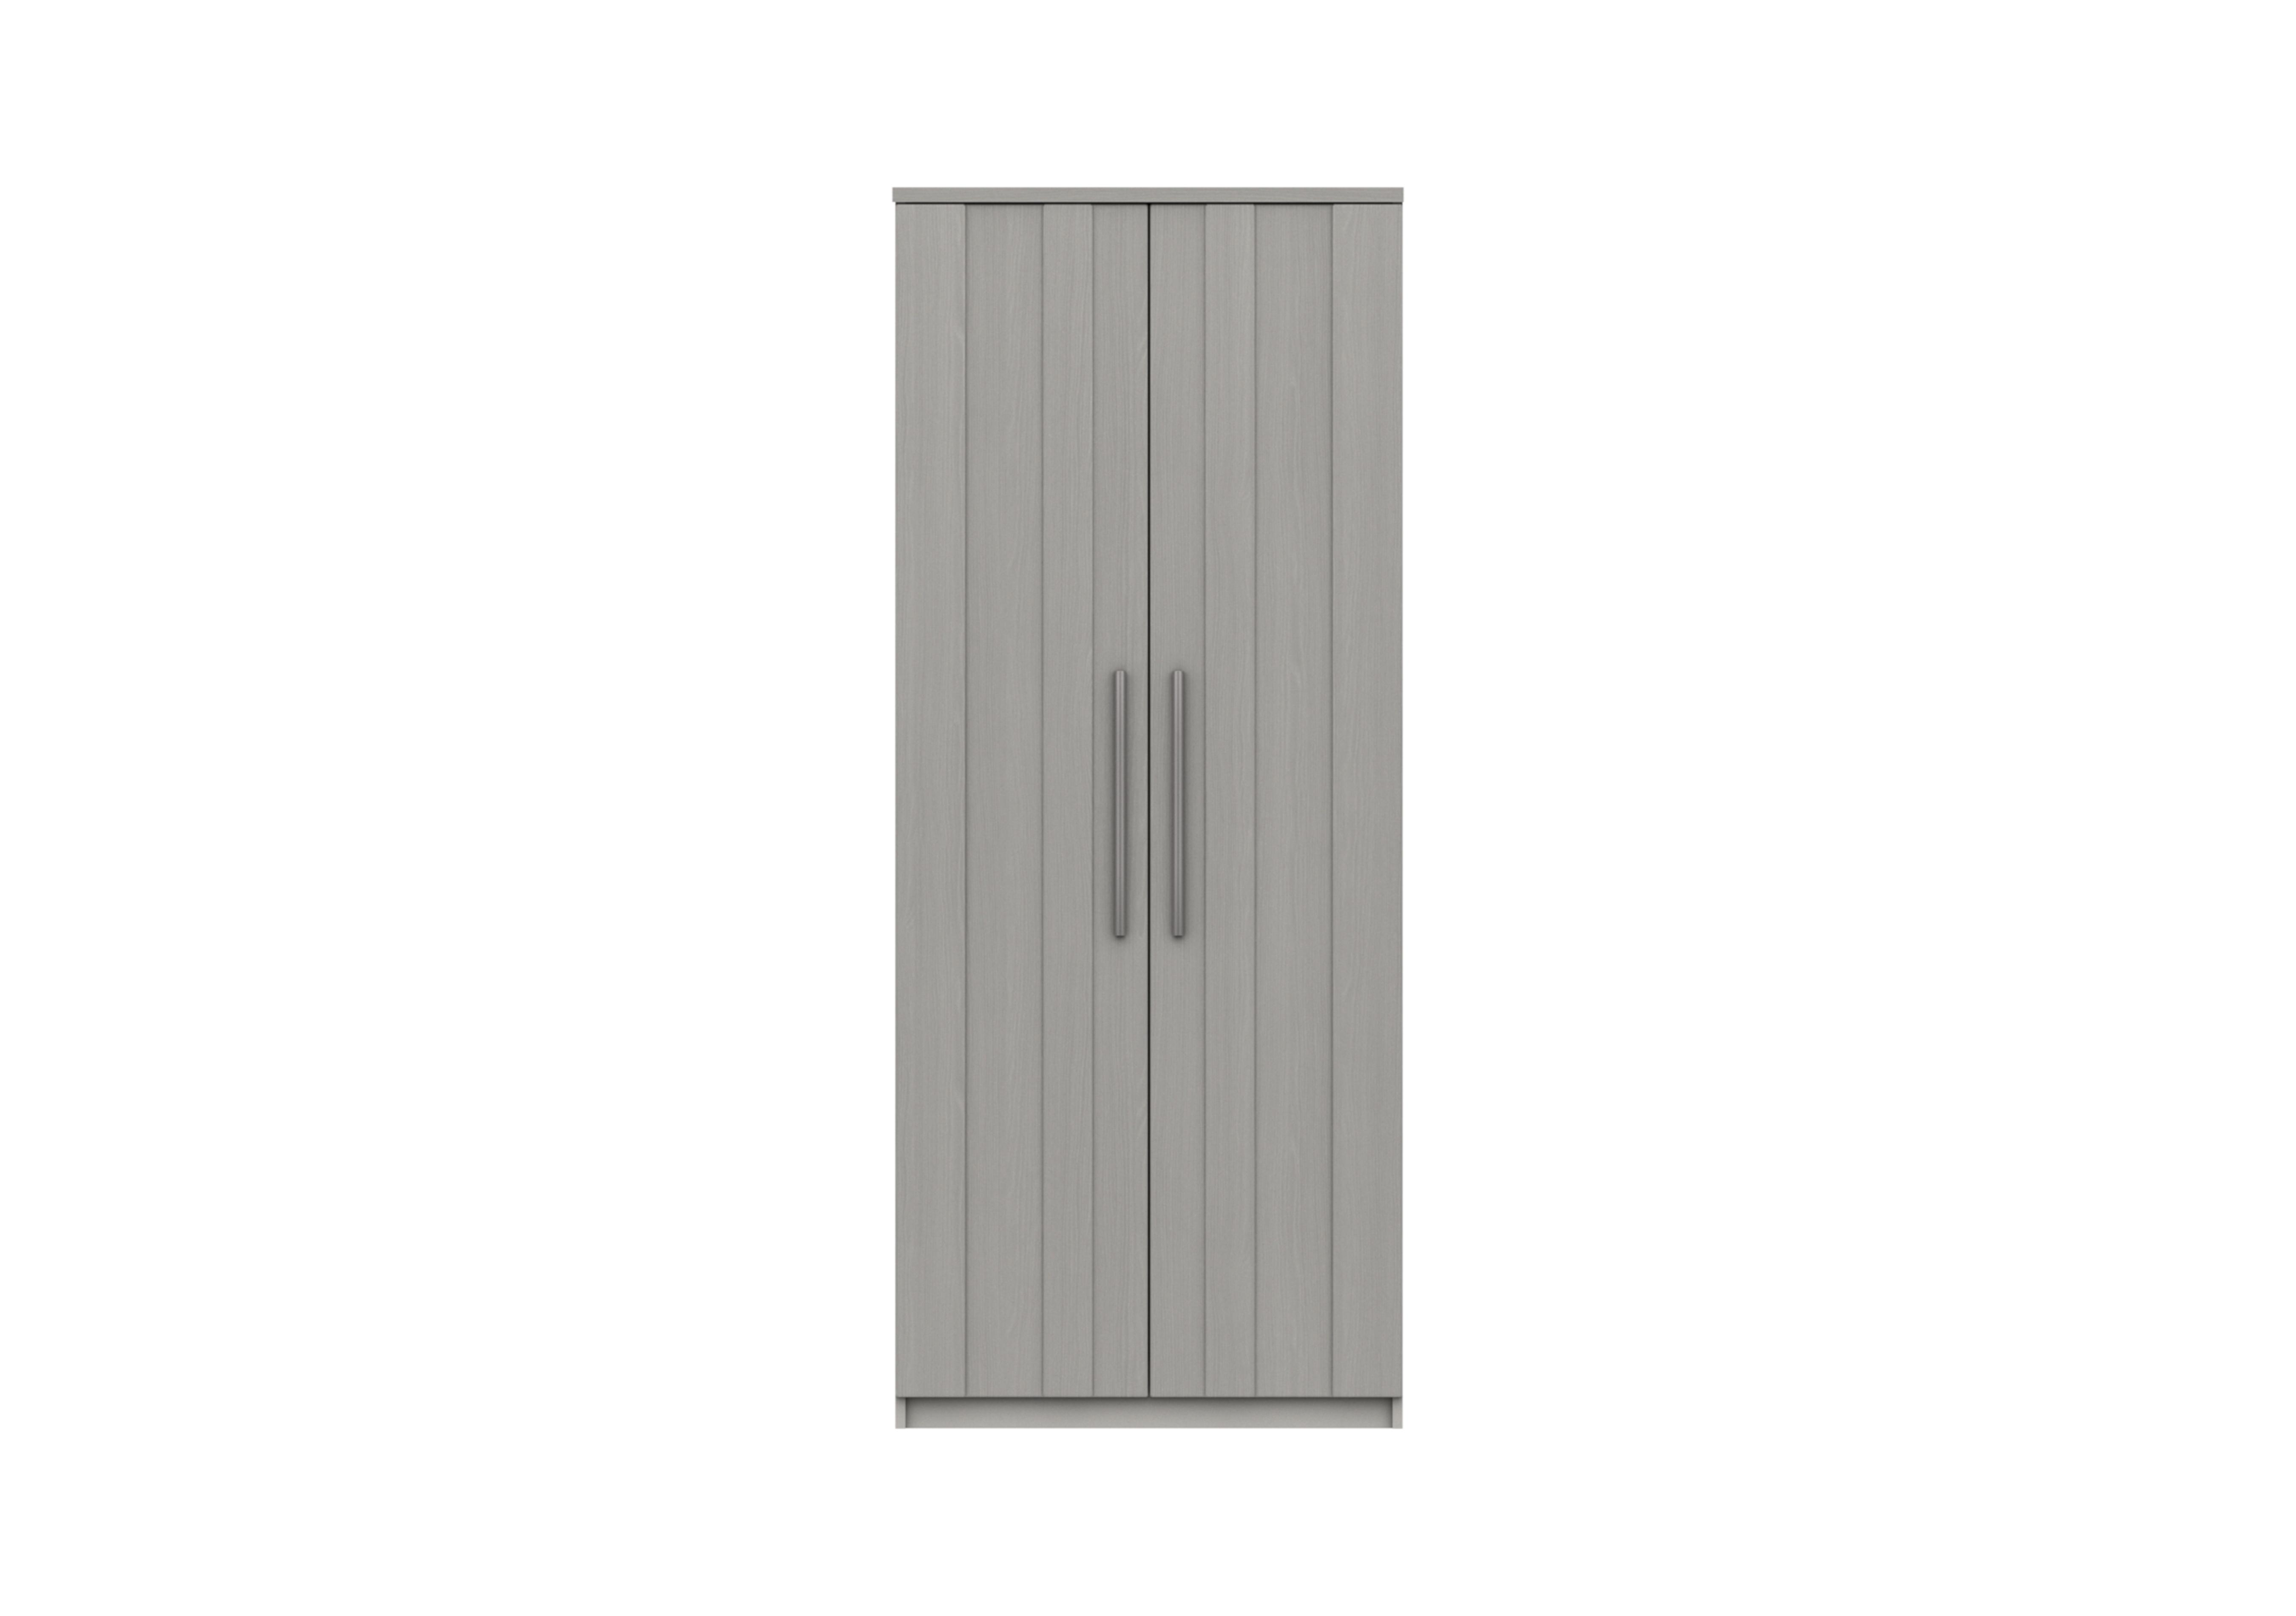 Victoria 2 Door Wardrobe in Light Grey on Furniture Village